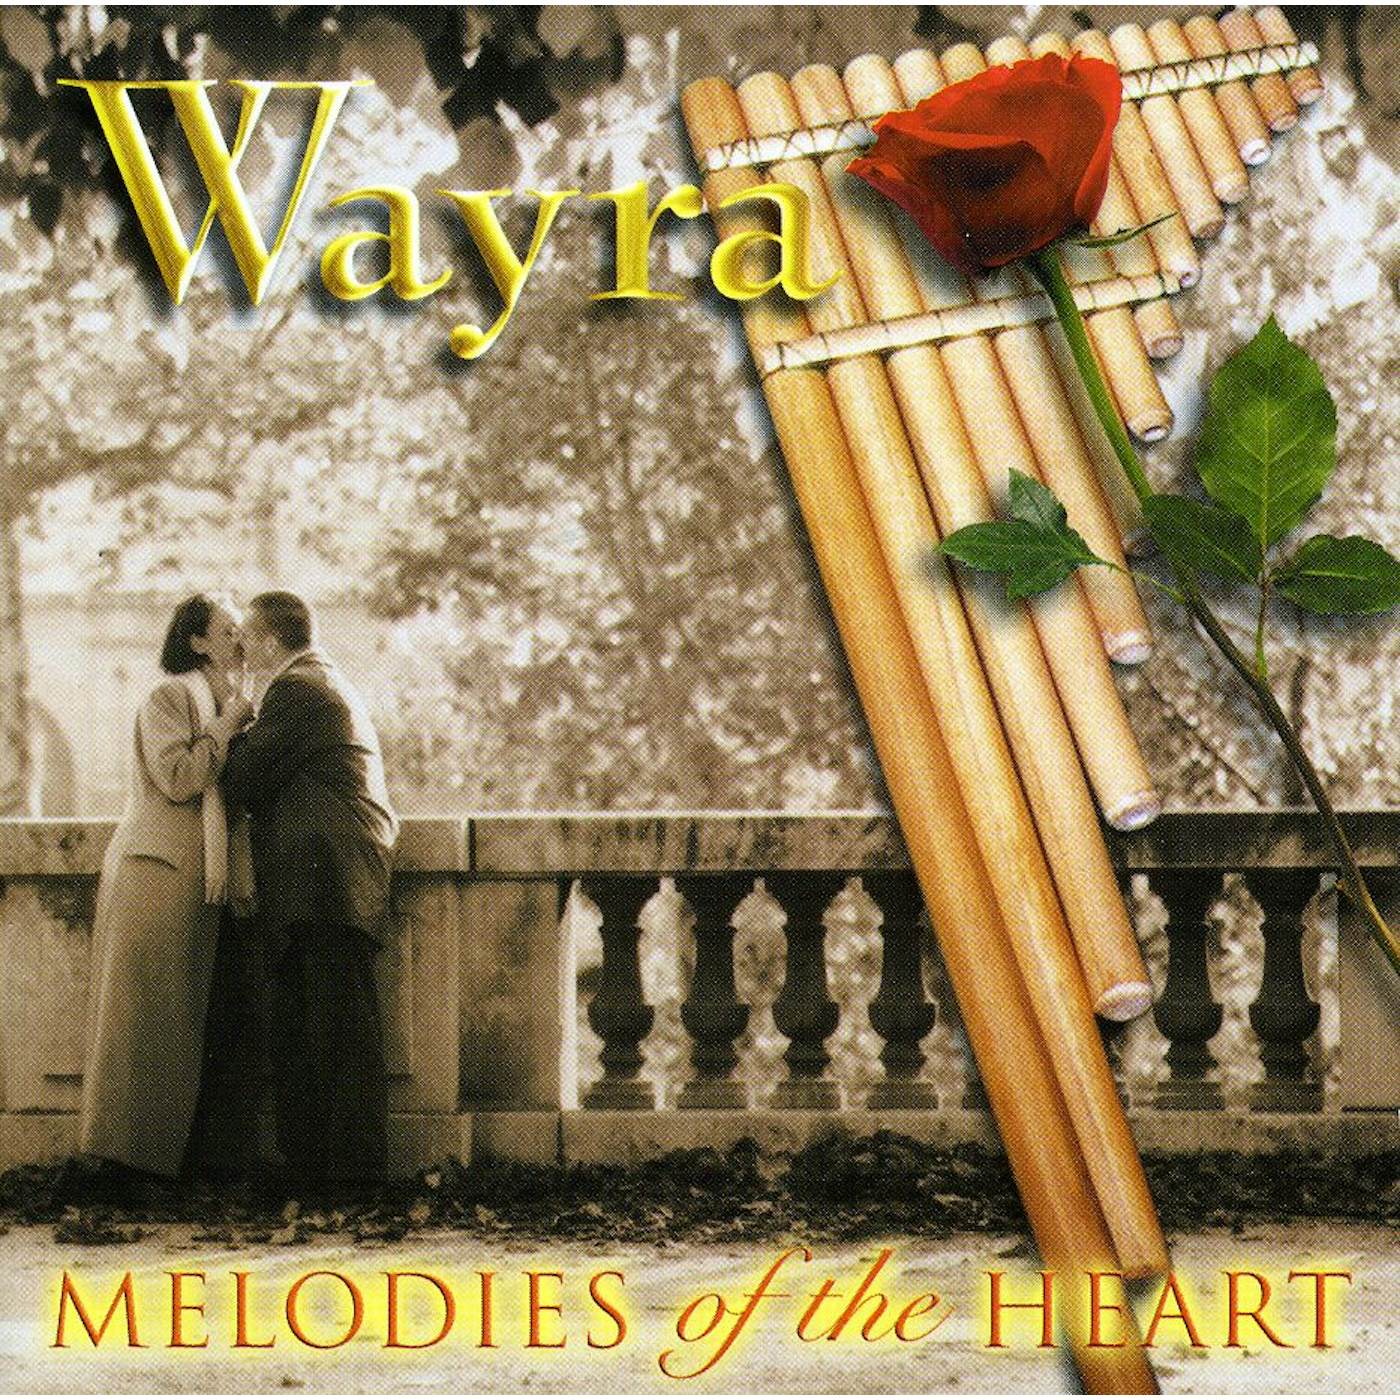 Wayra MELODIES OF THE HEART CD